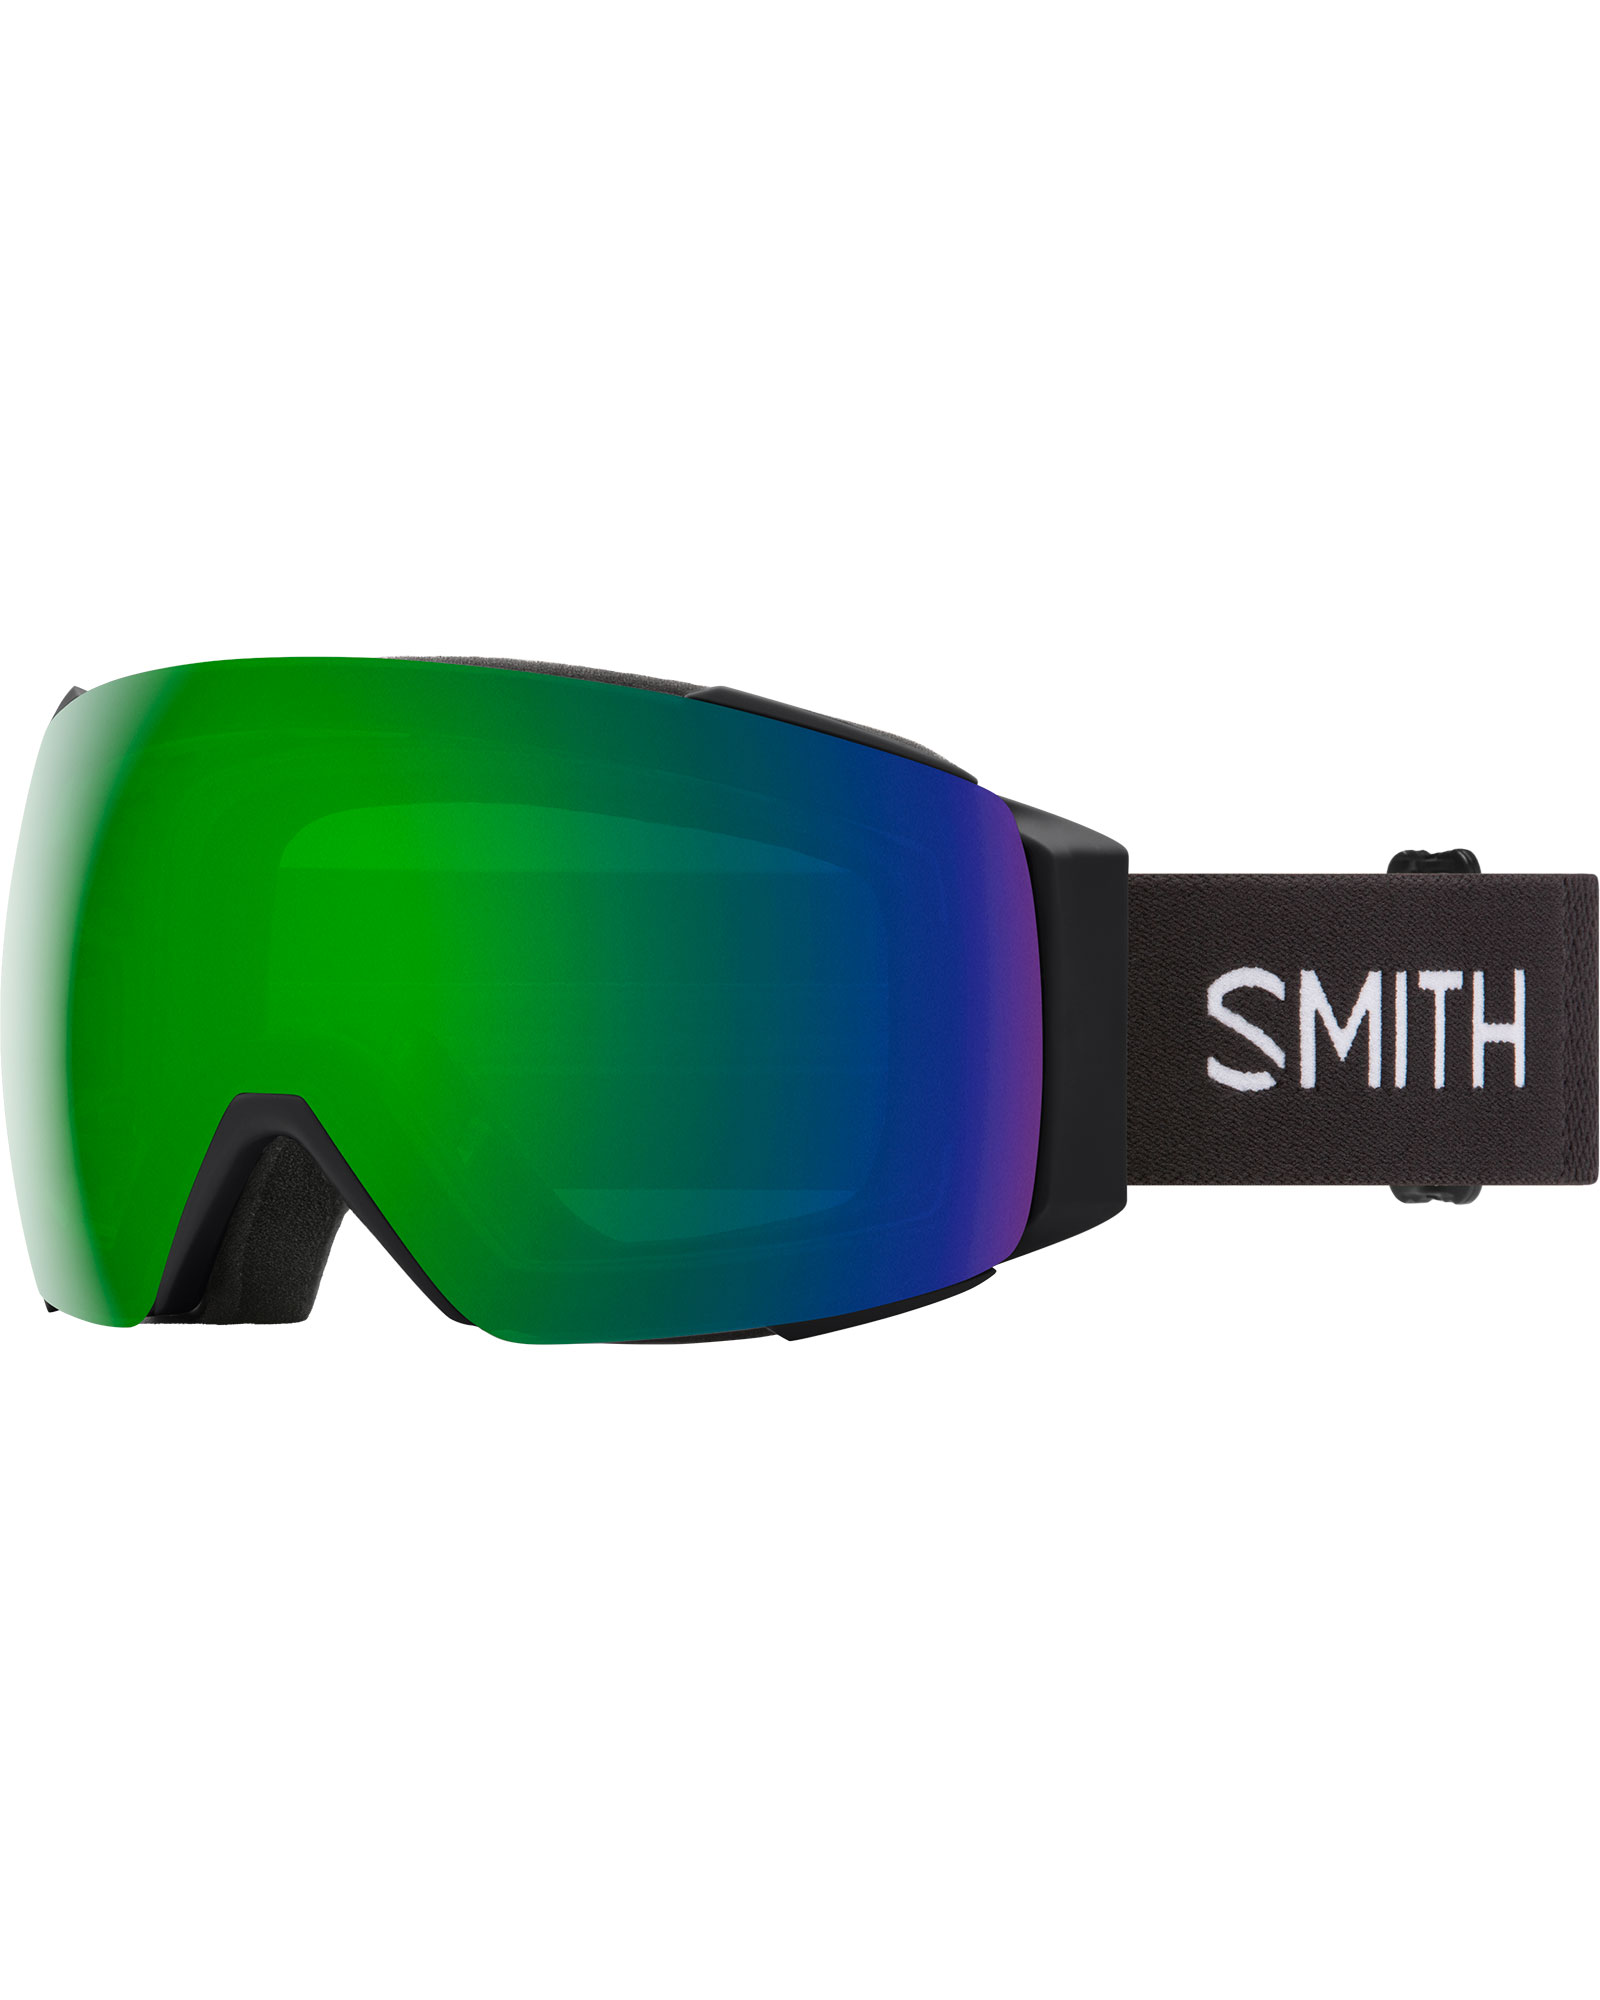 Smith I/o Mag Black / Chromapop Sun Green Mirror + Chromapop Storm Rose Flash Goggles